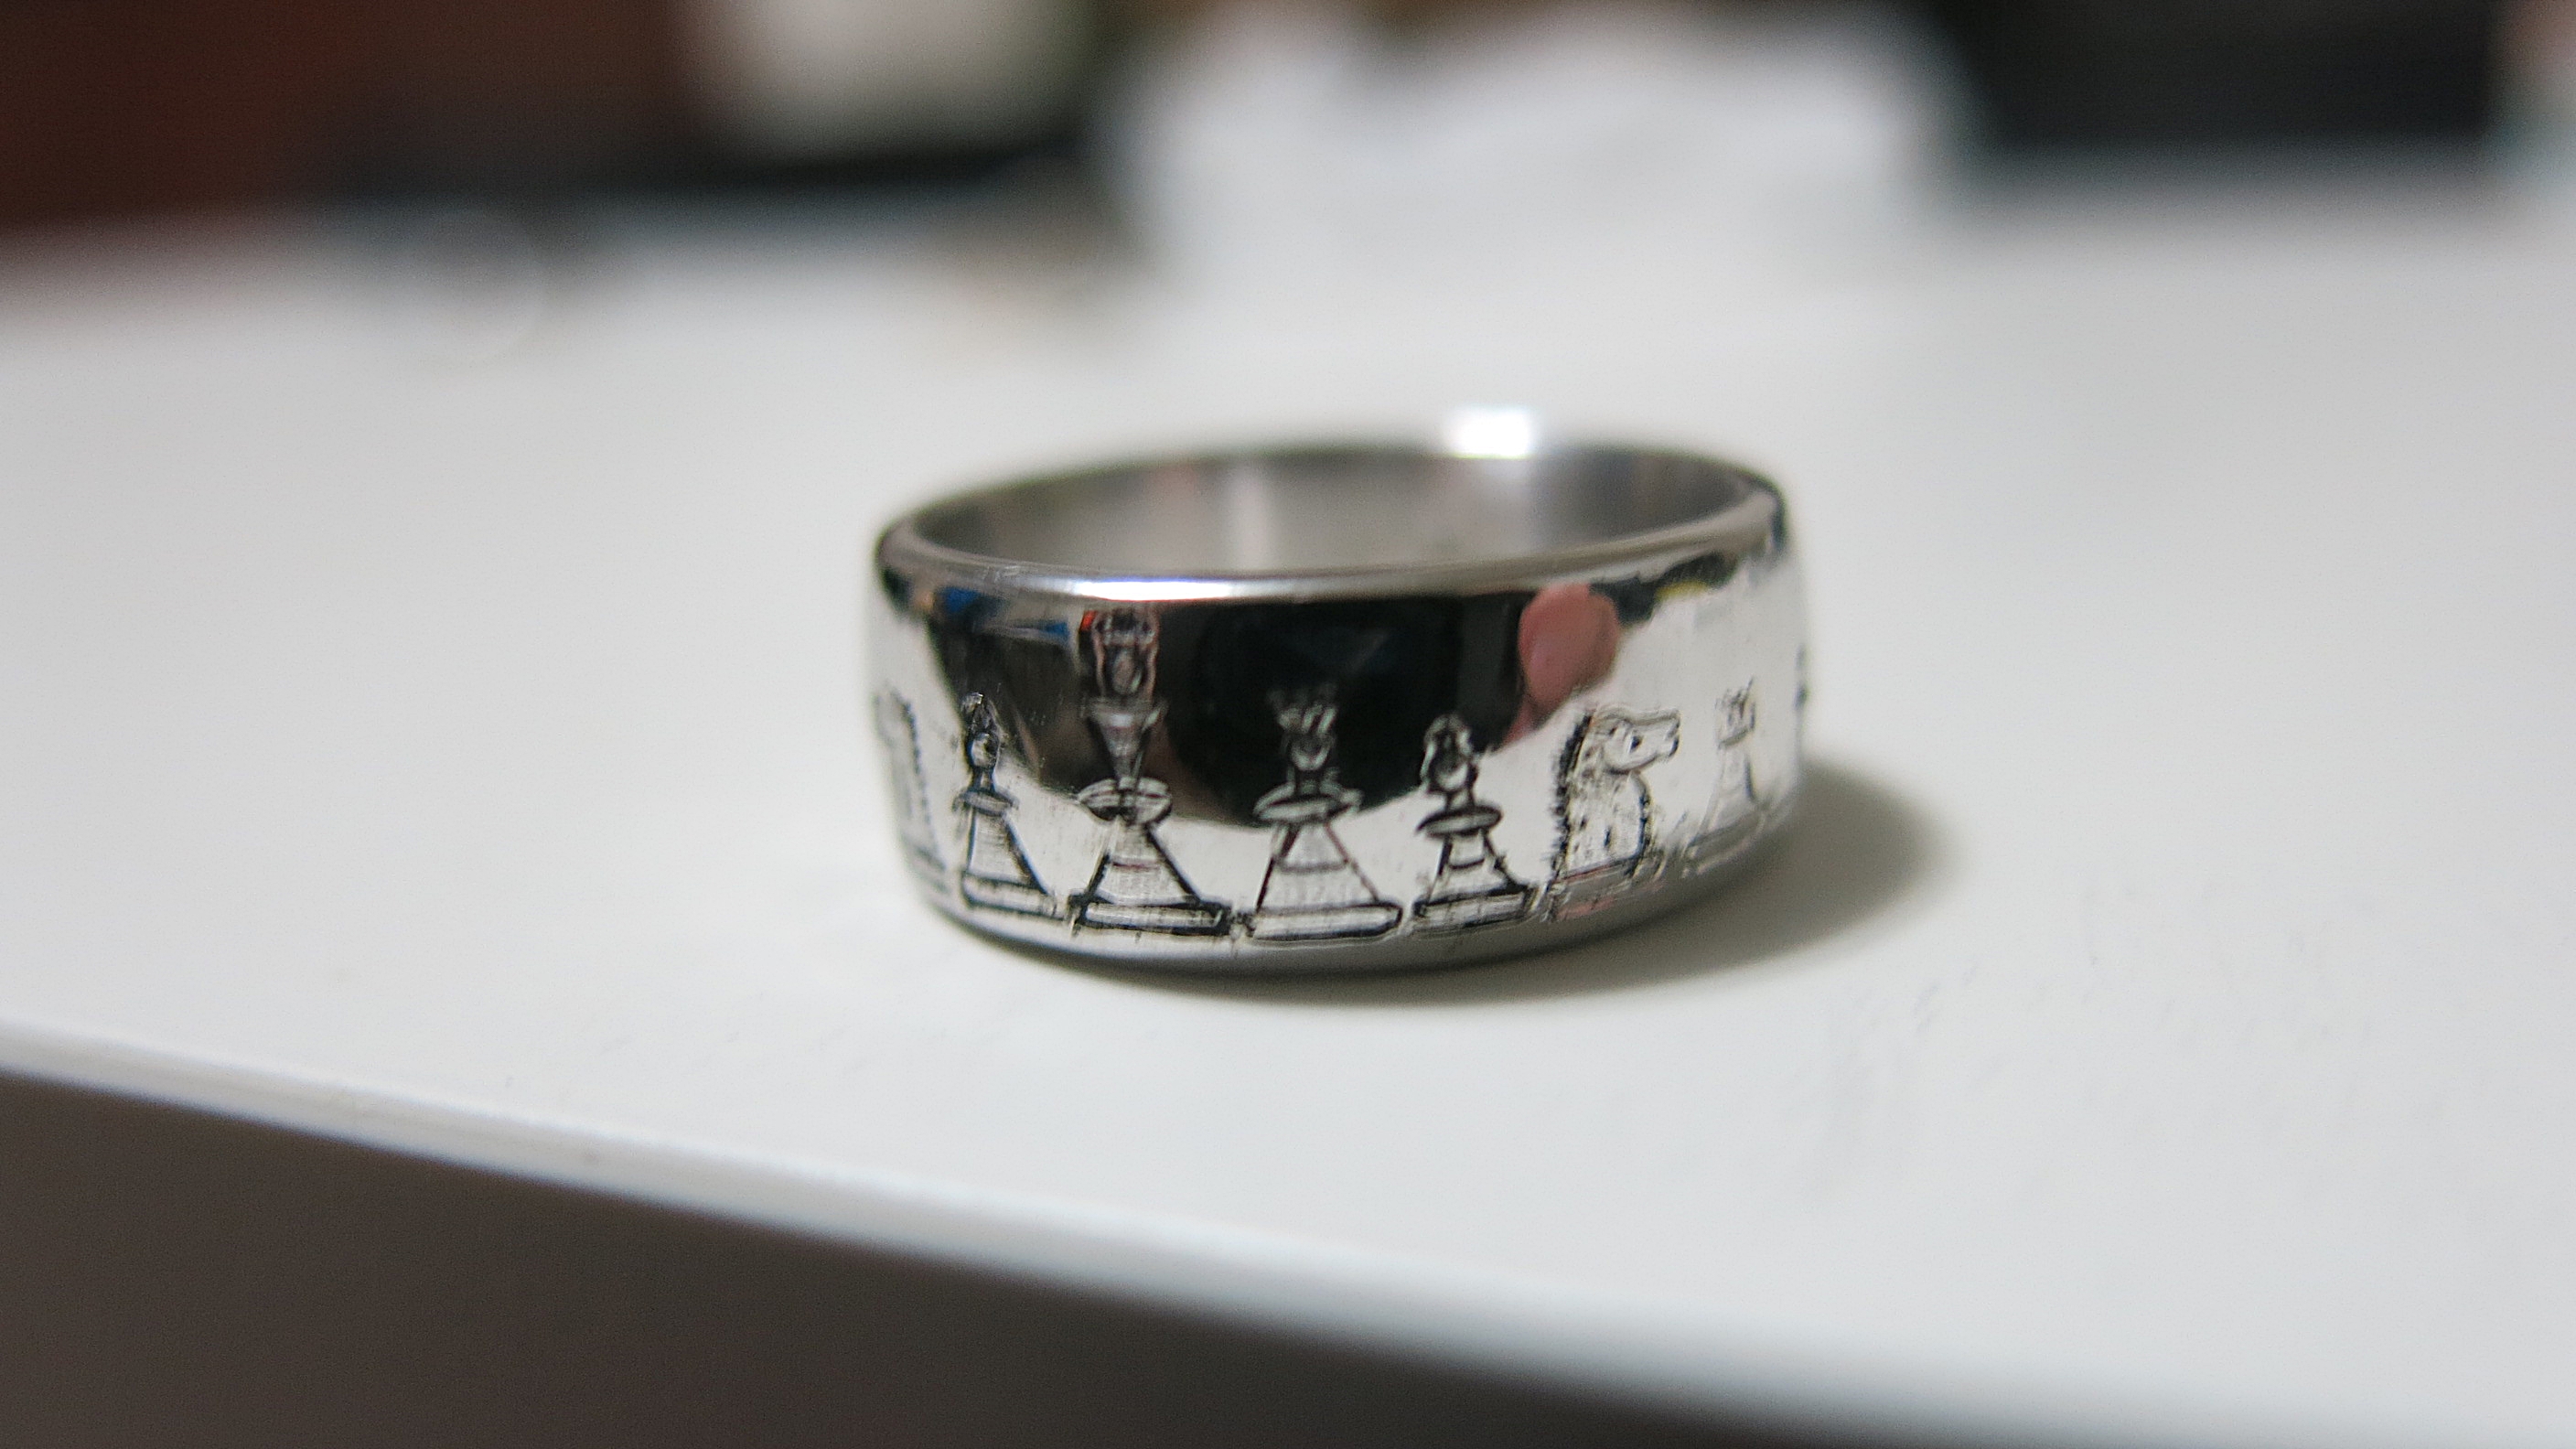 Engraved Wedding Rings